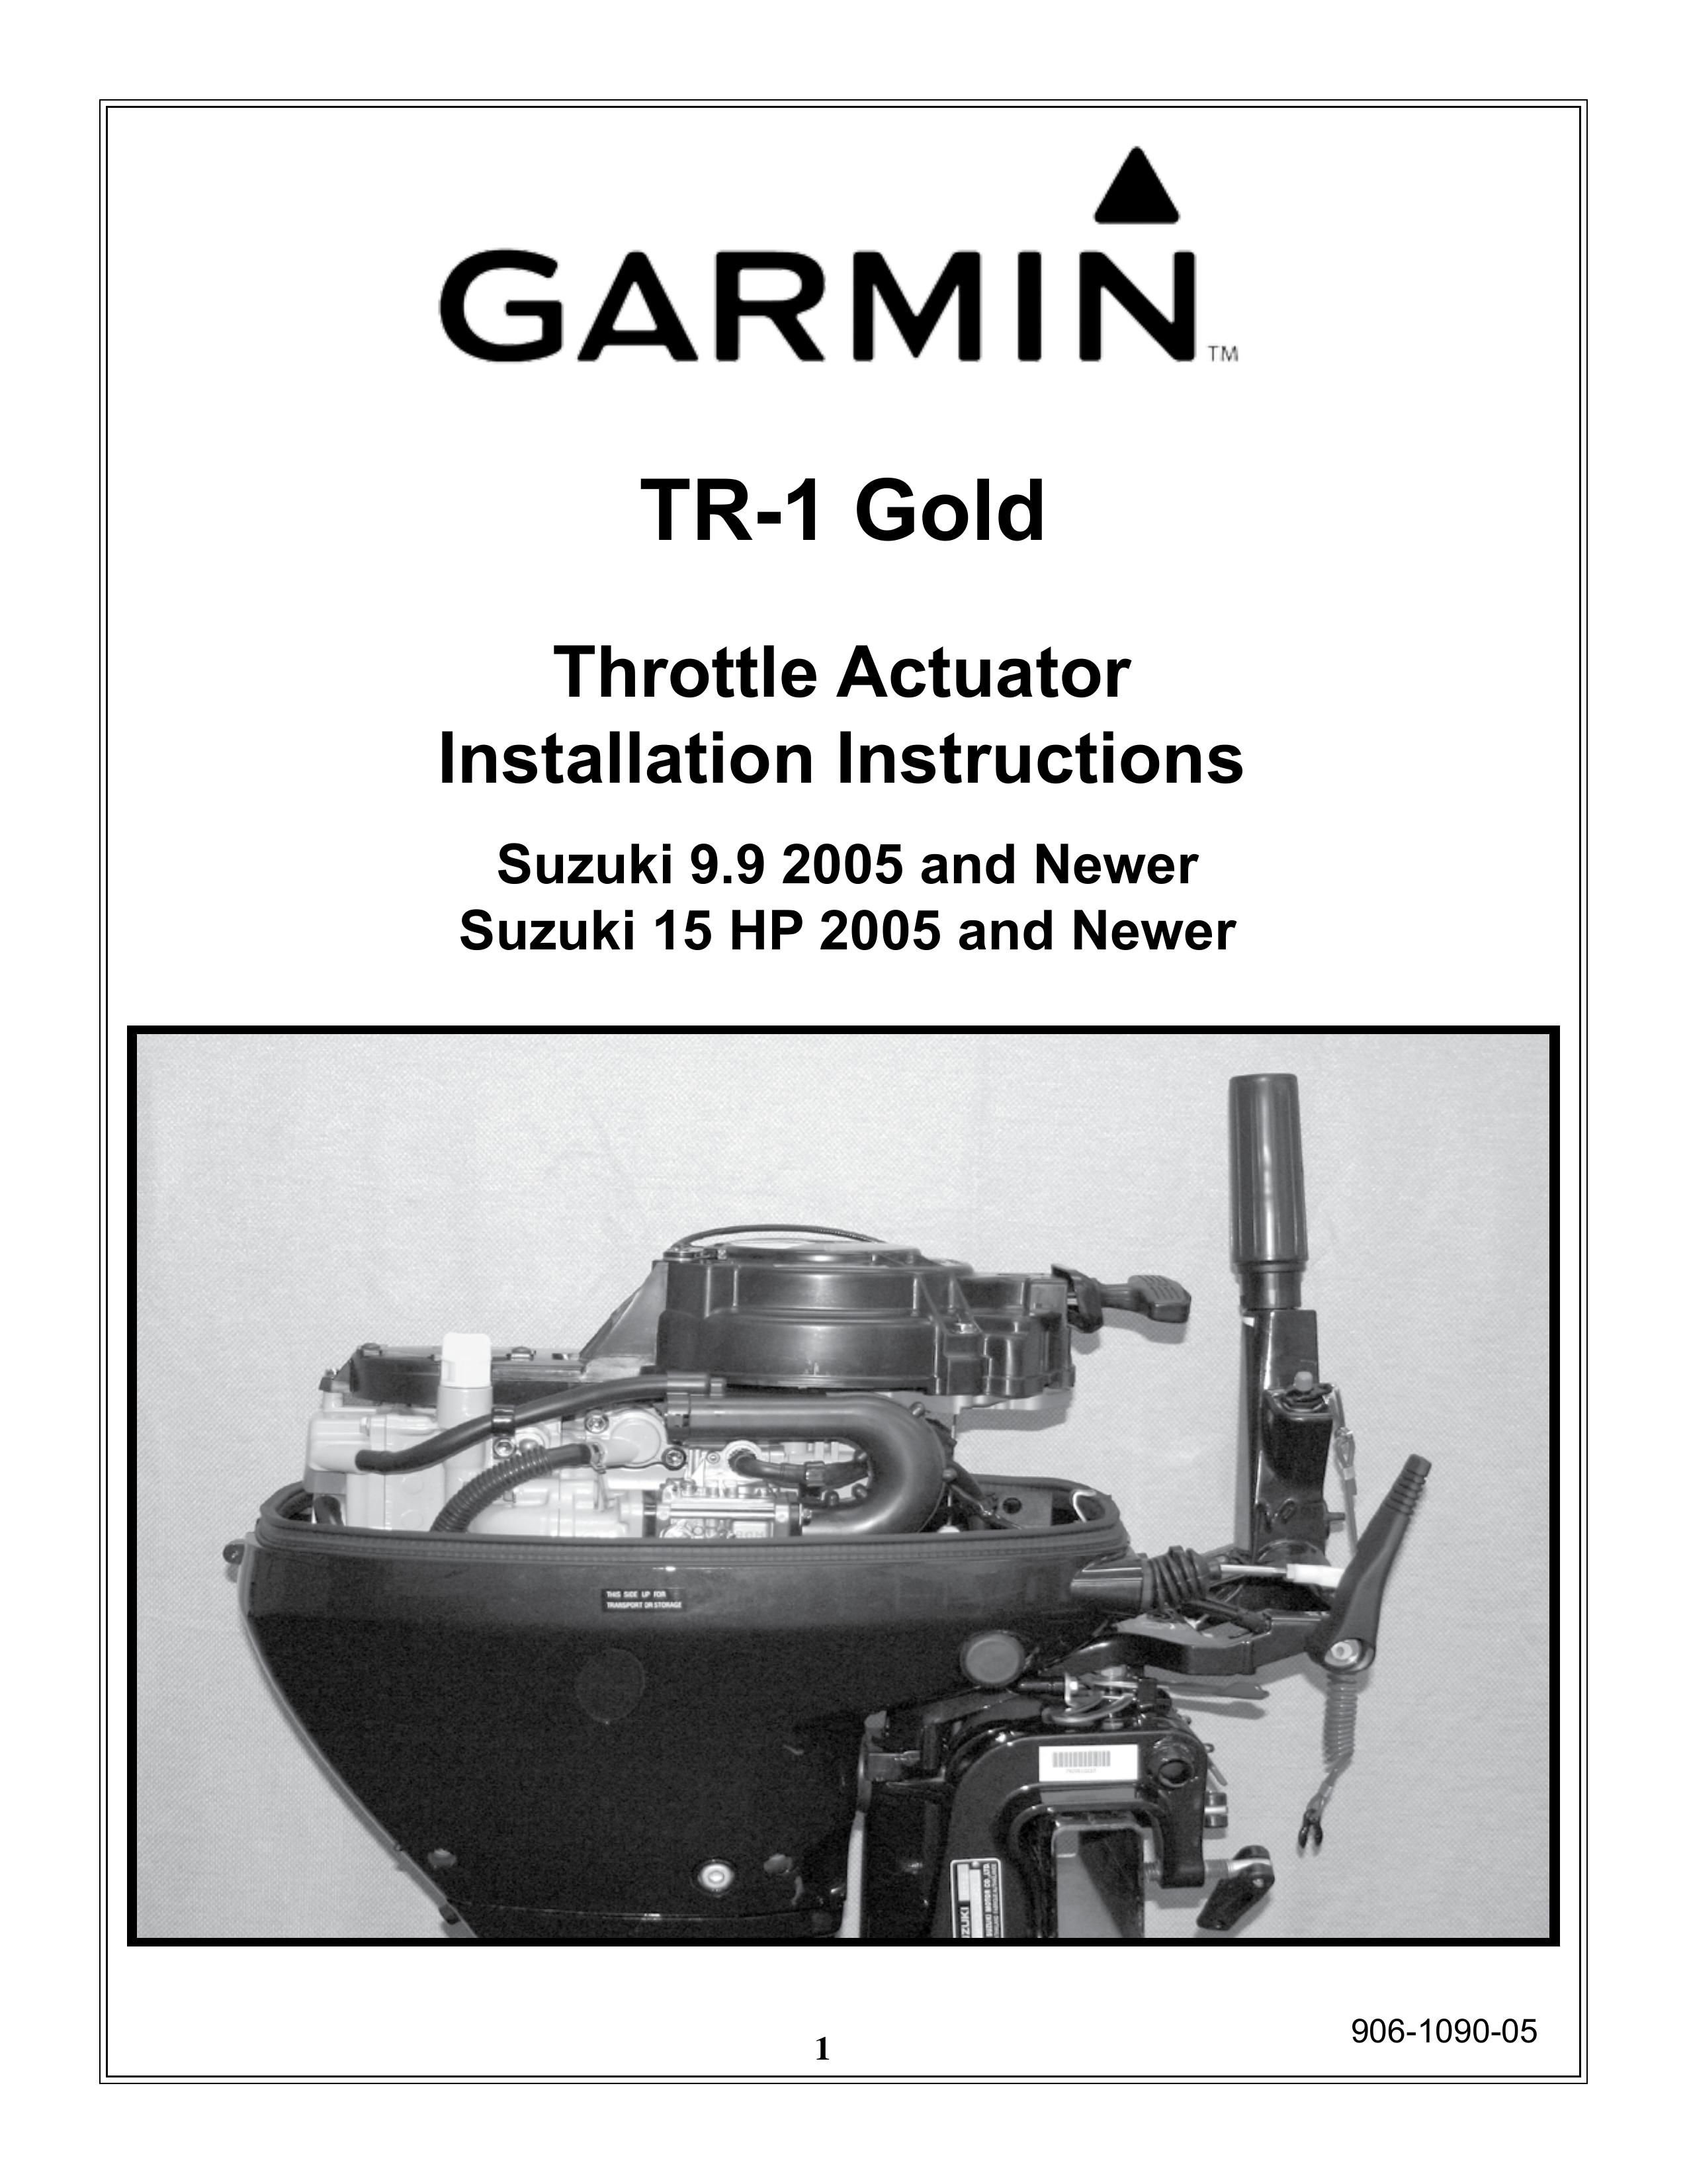 Garmin 906-1090-05 Boating Equipment User Manual